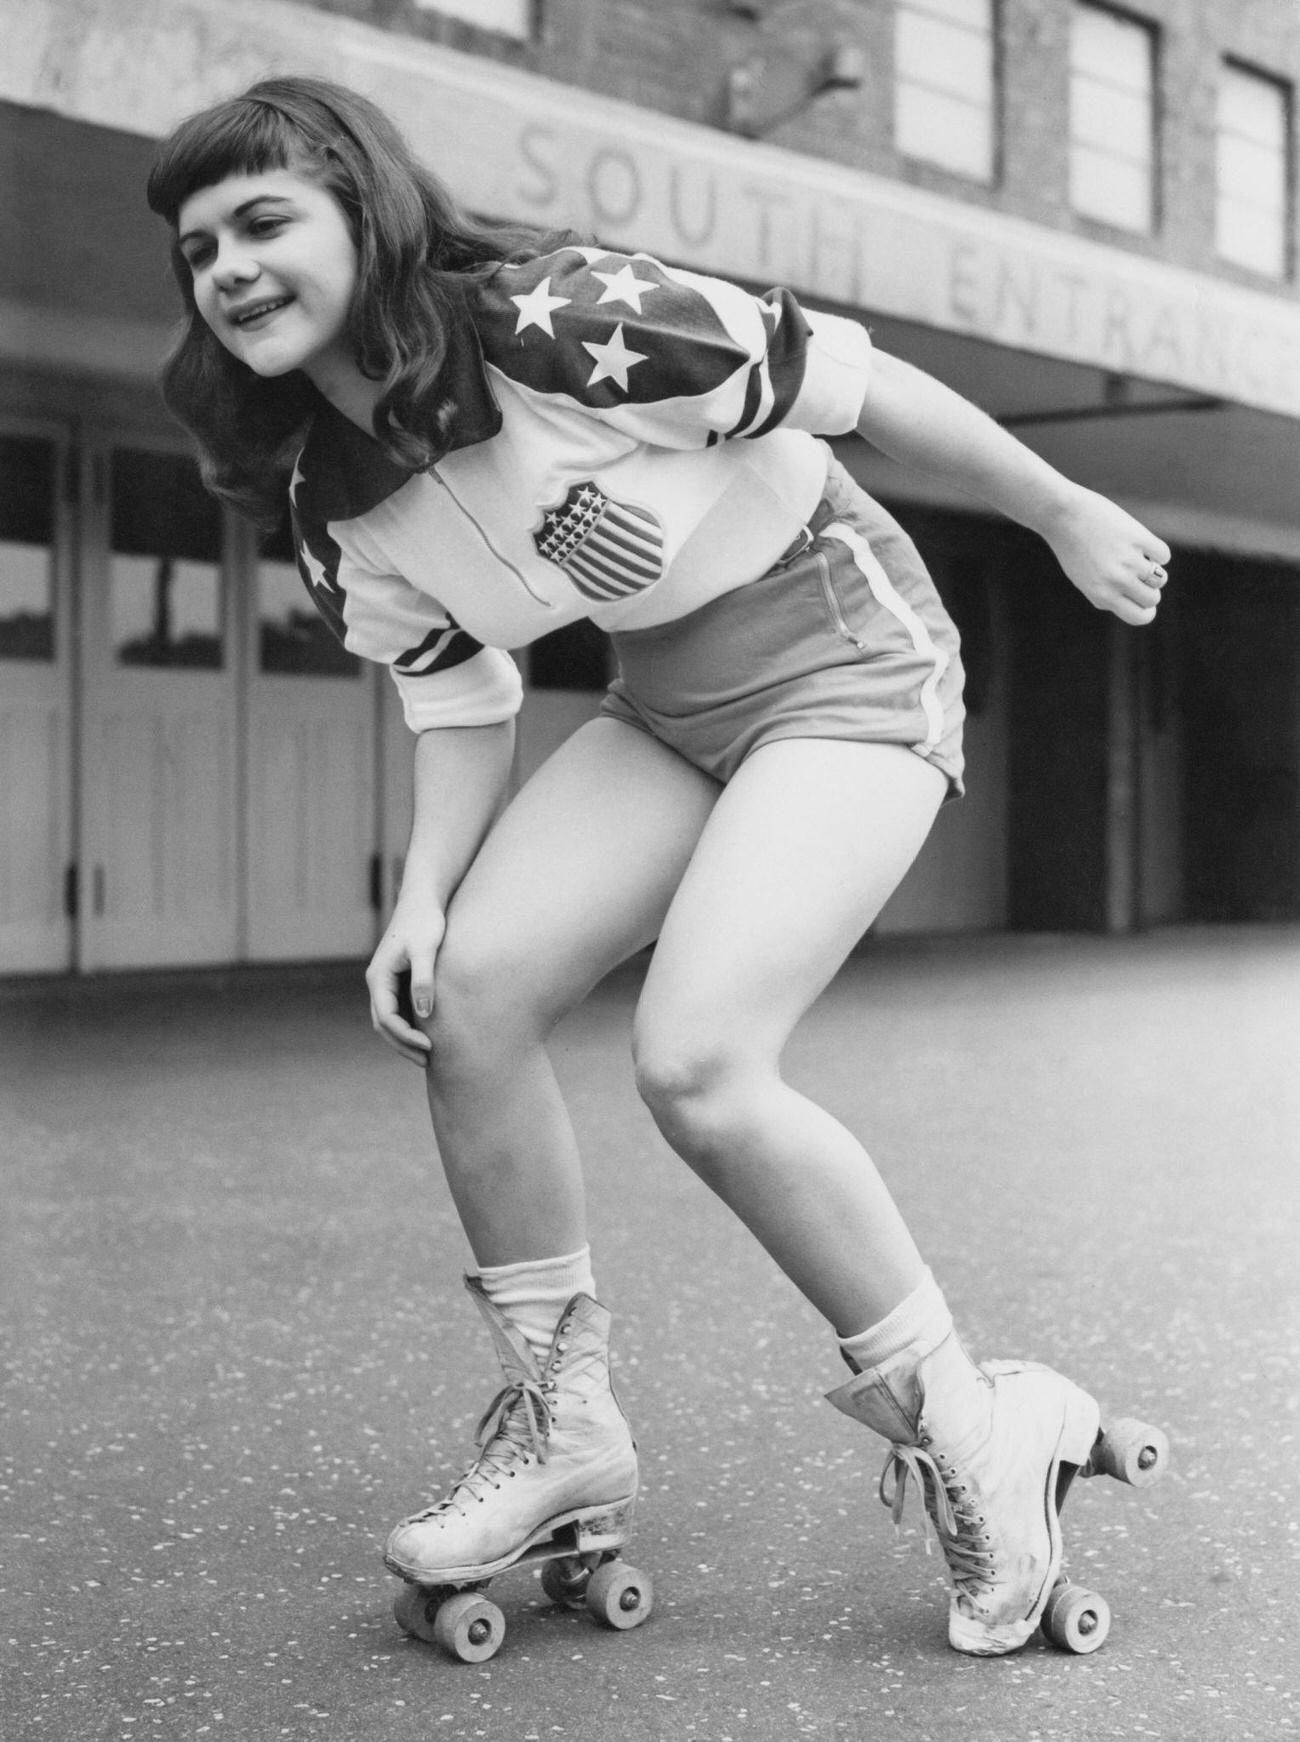 Joan Spangehl, Roller Derby Skater from New York Chiefs, London, 1953